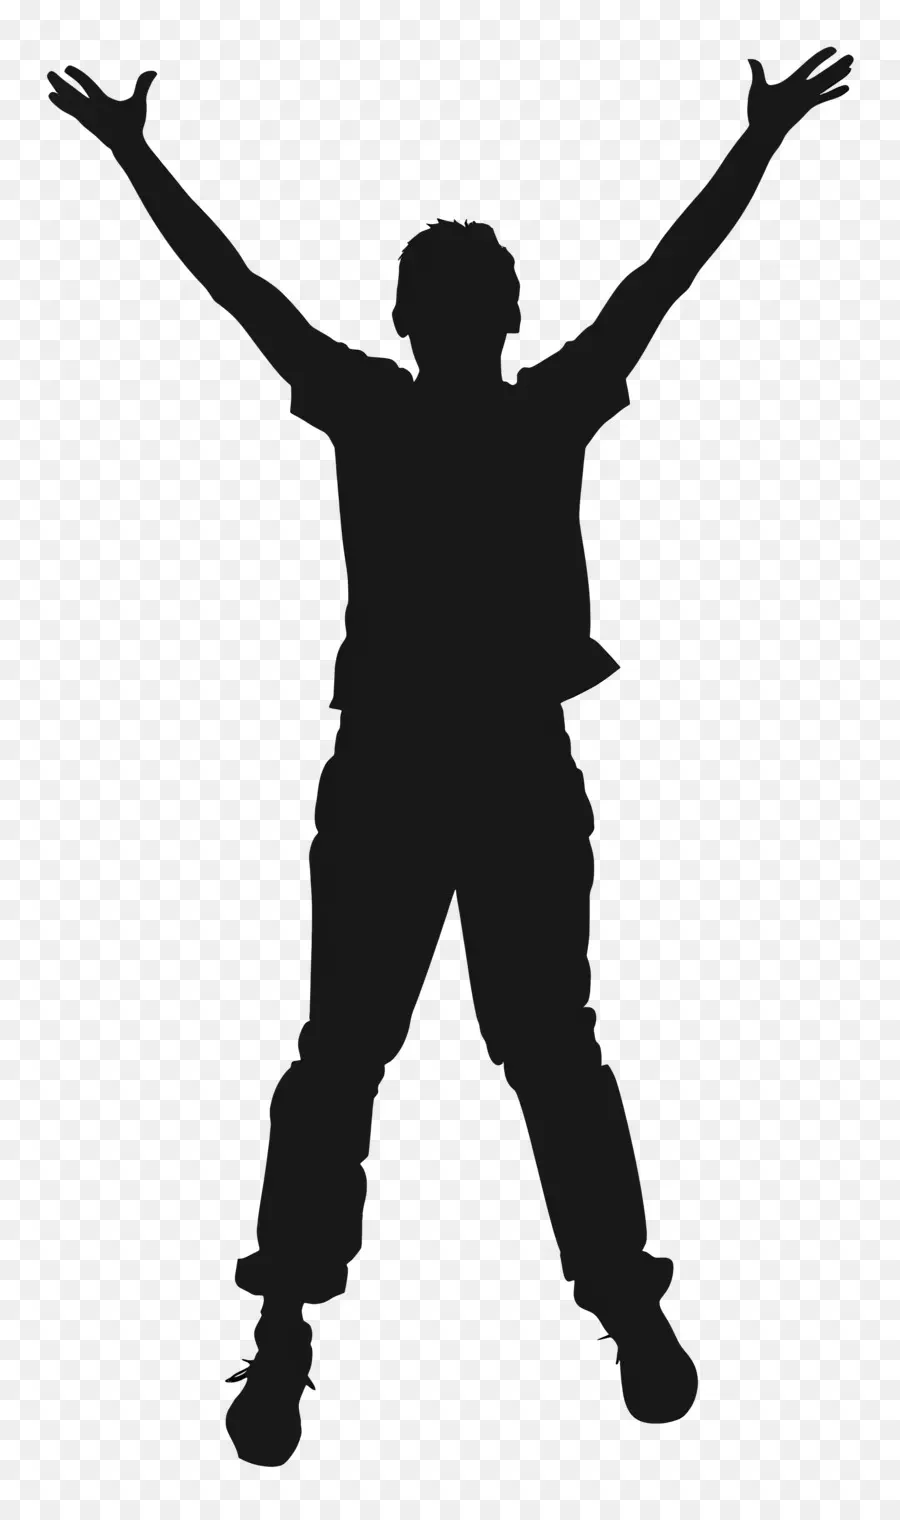 uomo felice silhouette silhouette sorridente in piedi in aria - Silhouette Person Smithing, Hands Up in Air